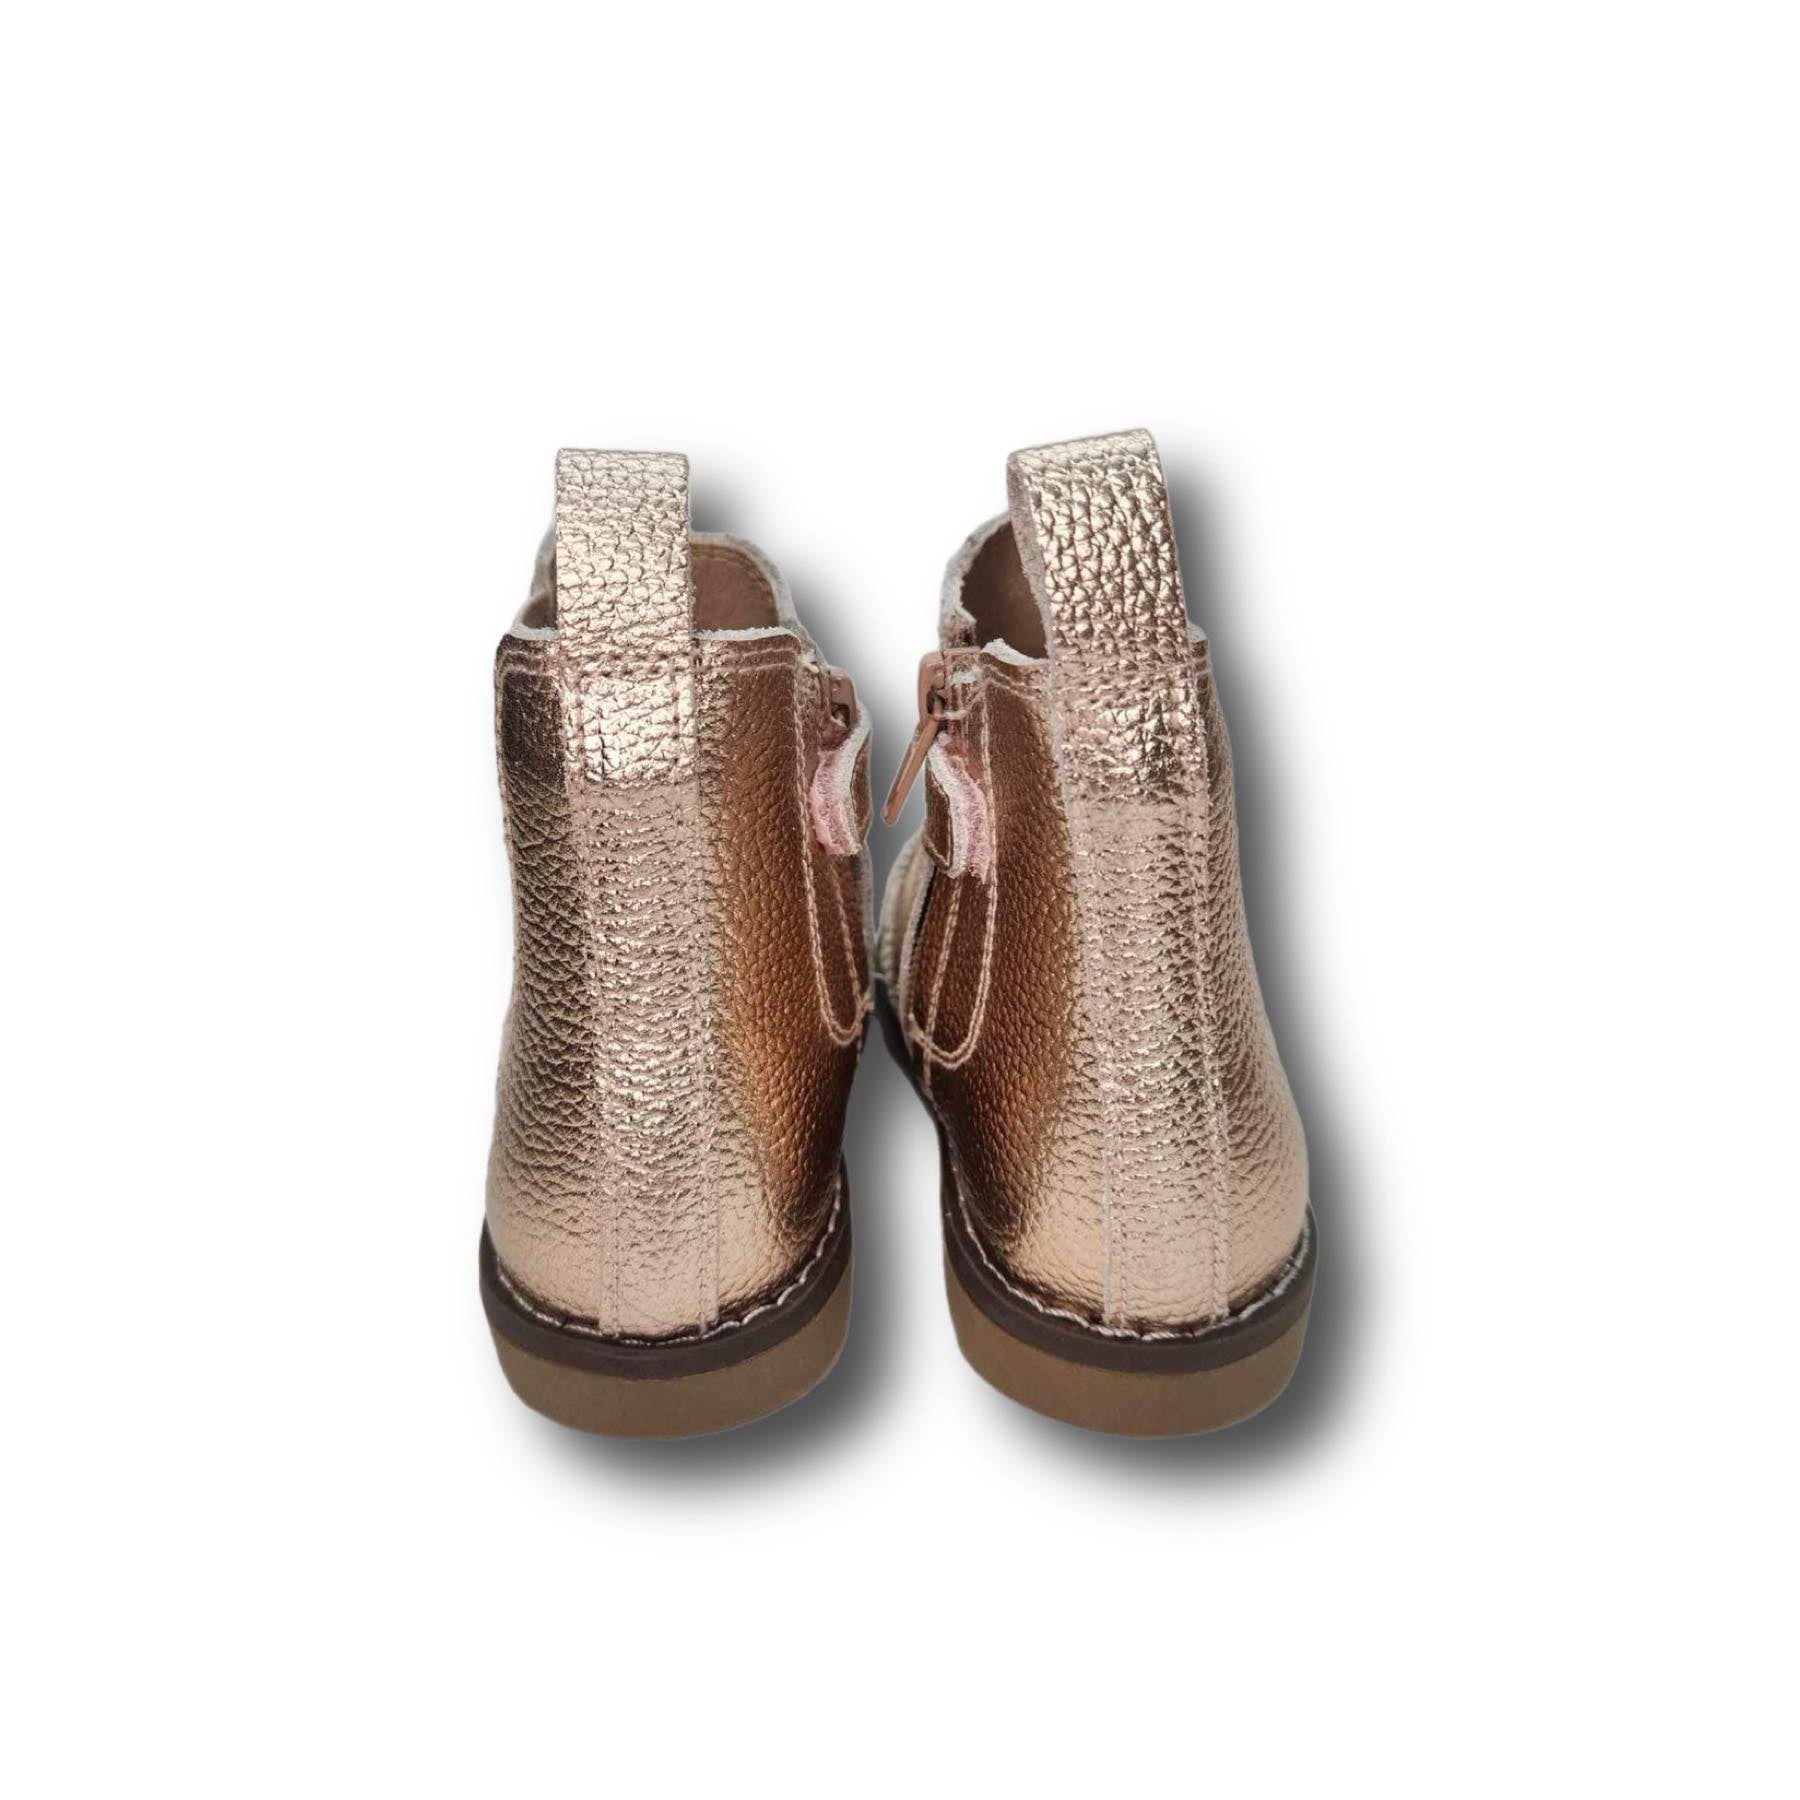 LIARA Children's Boot in Rose Gold Metallic Leather